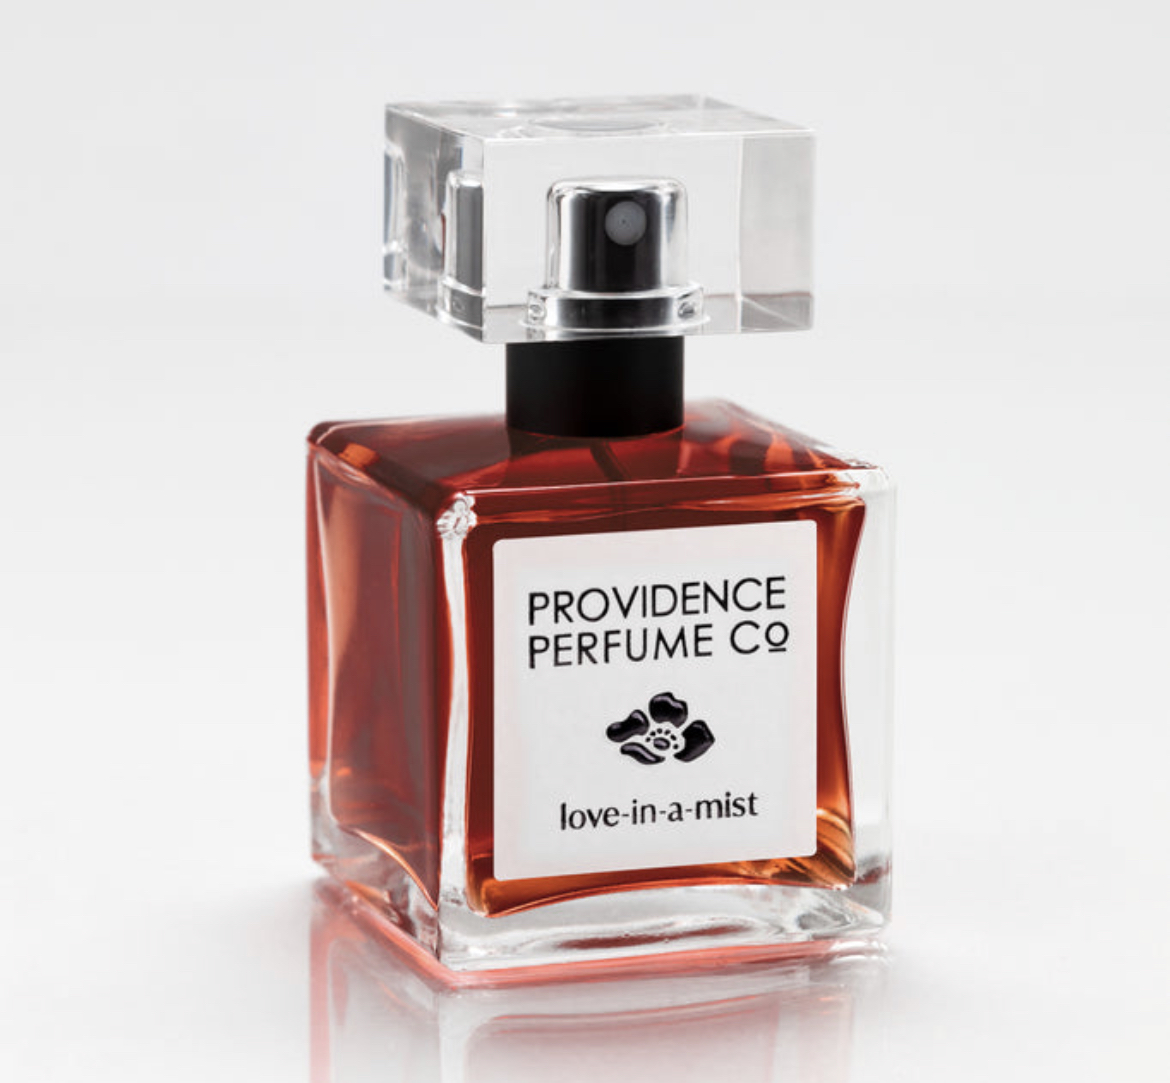 Providence perfume co